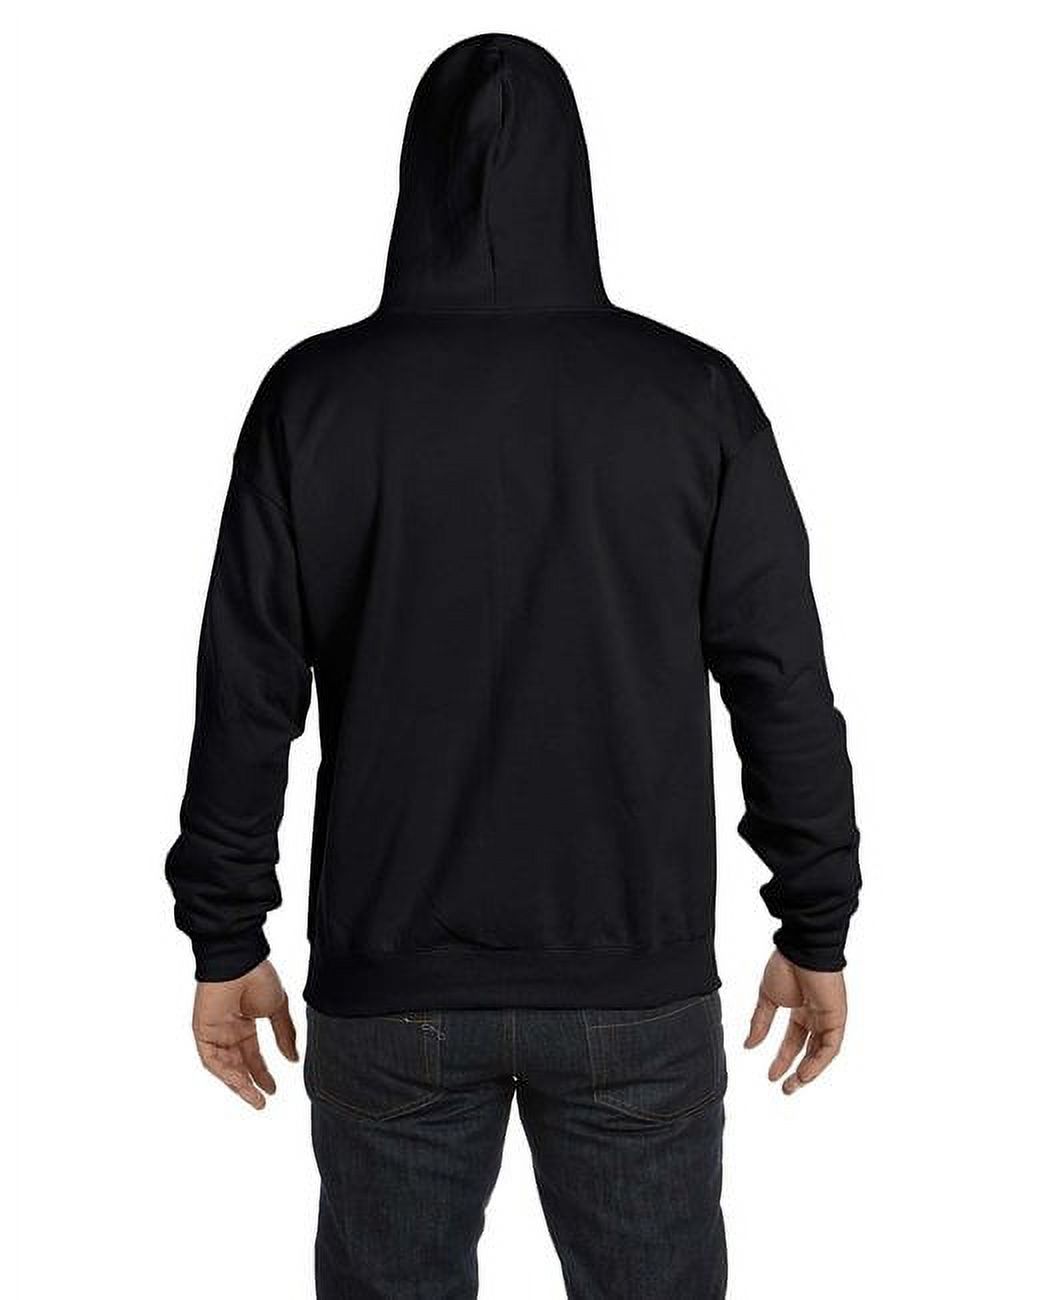 Hanes Mens Ecosmart Full-Zip Hooded Sweatshirt - image 2 of 4